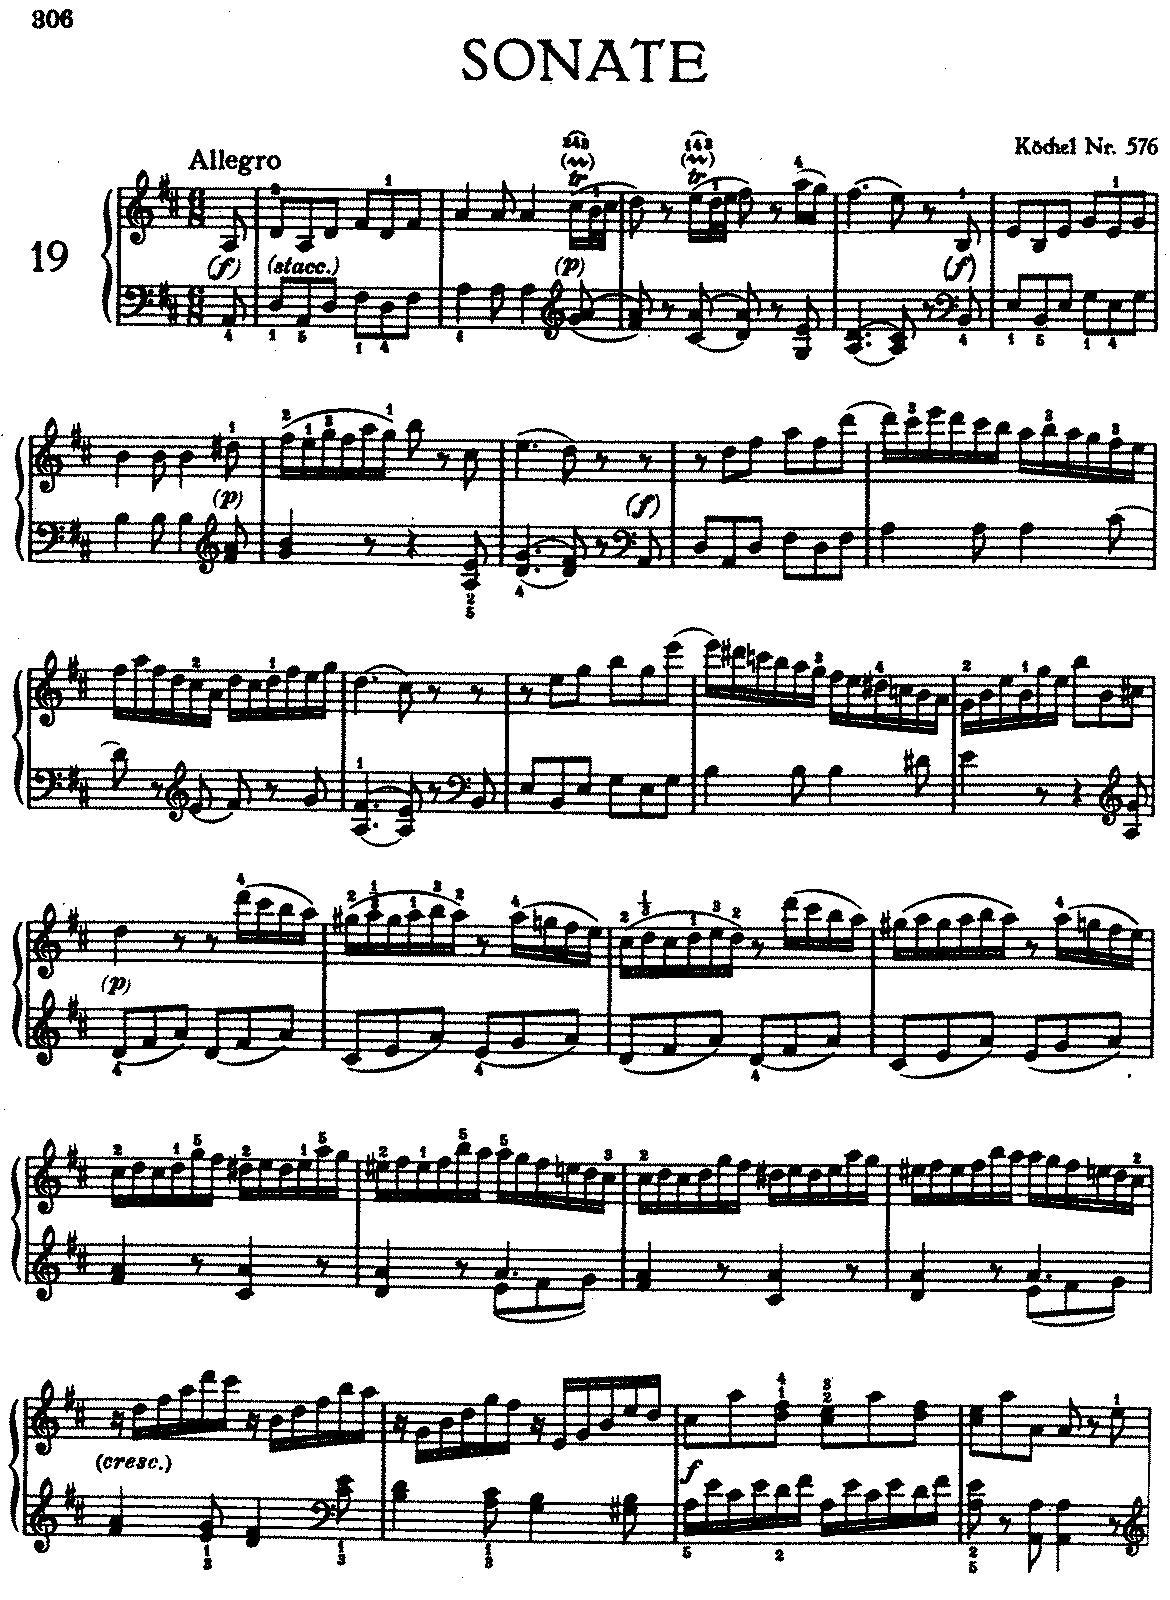 Piano Sonata No.18 in D major, K.576 (Mozart, Wolfgang Amadeus) - IMSLP ...